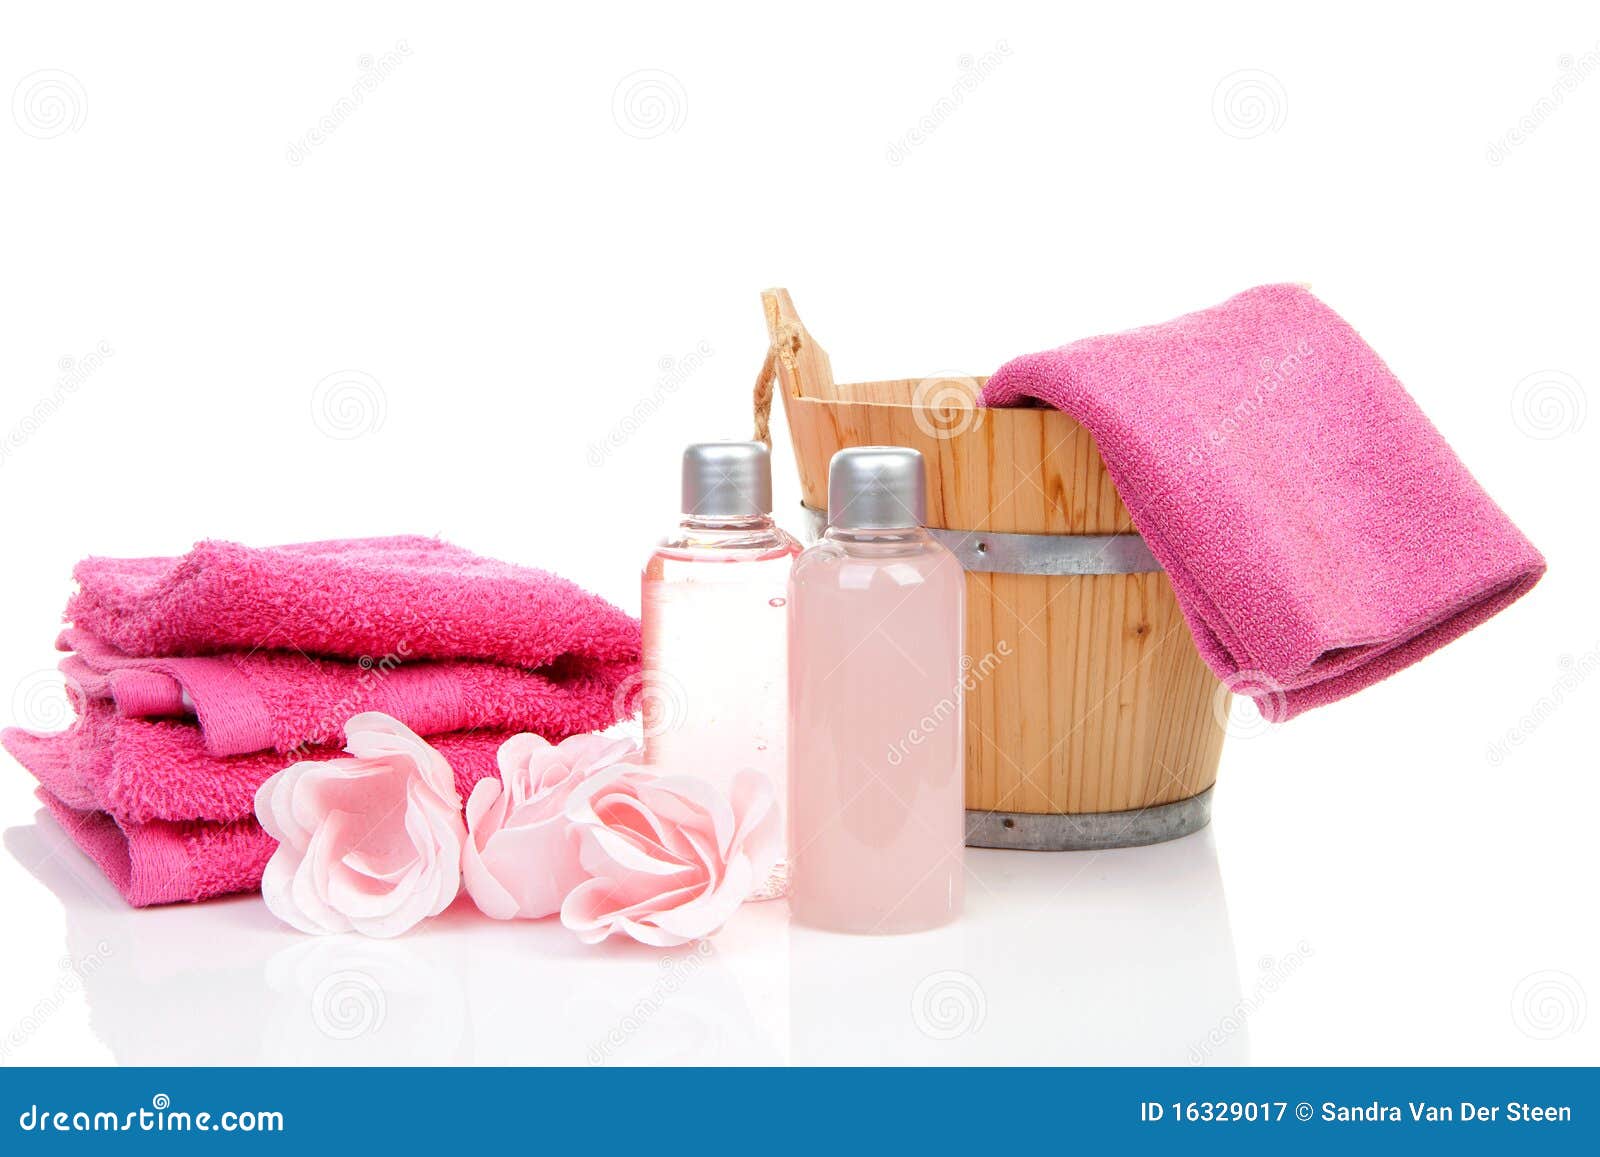 pink bath accessory for sauna or spa